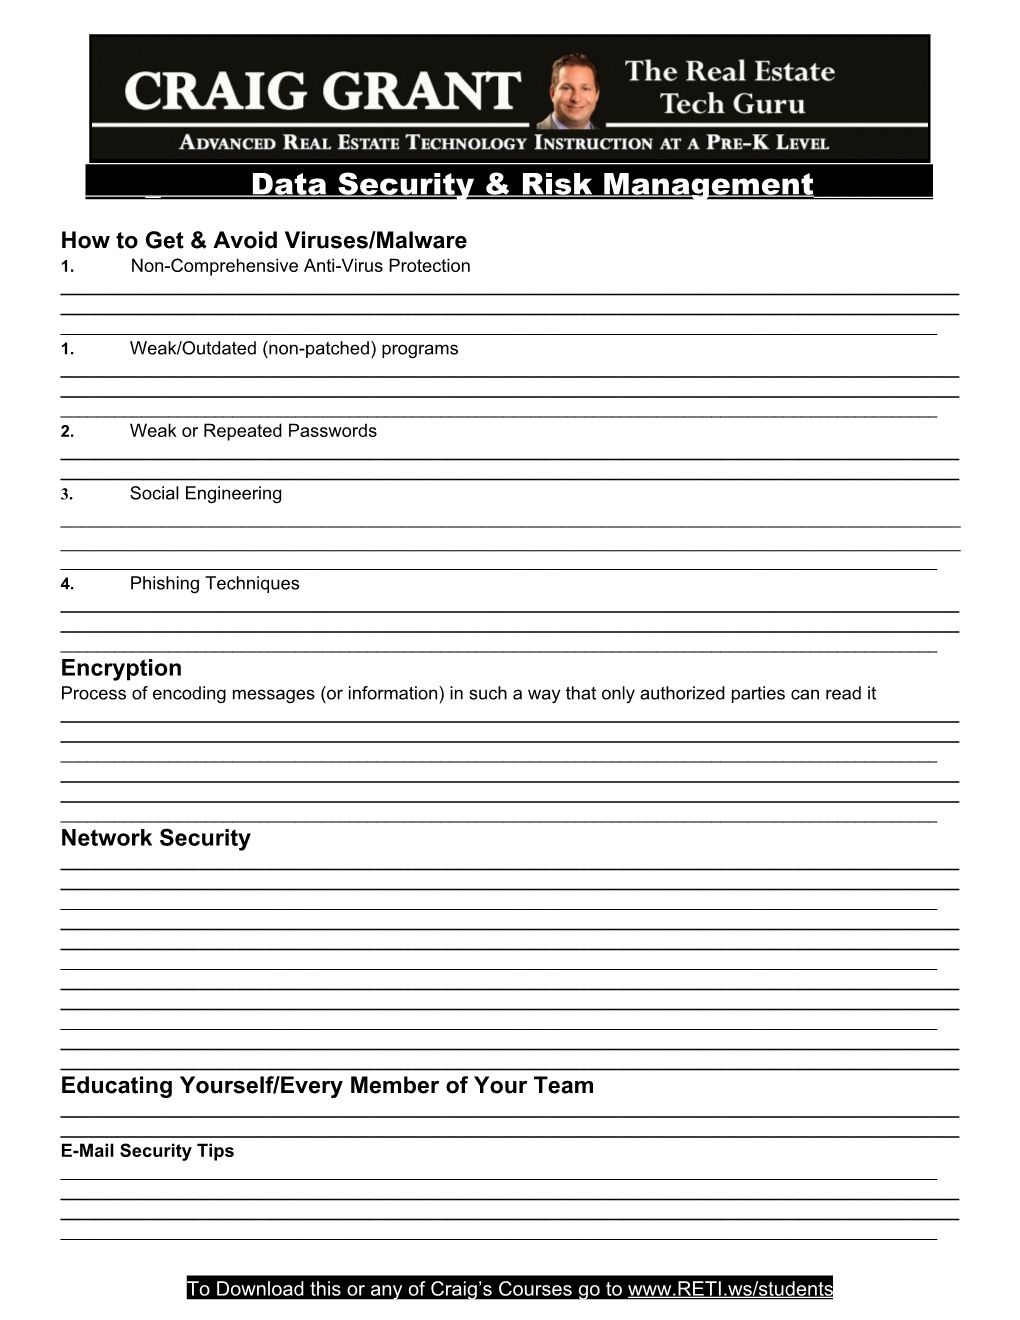 Data Security & Risk Management